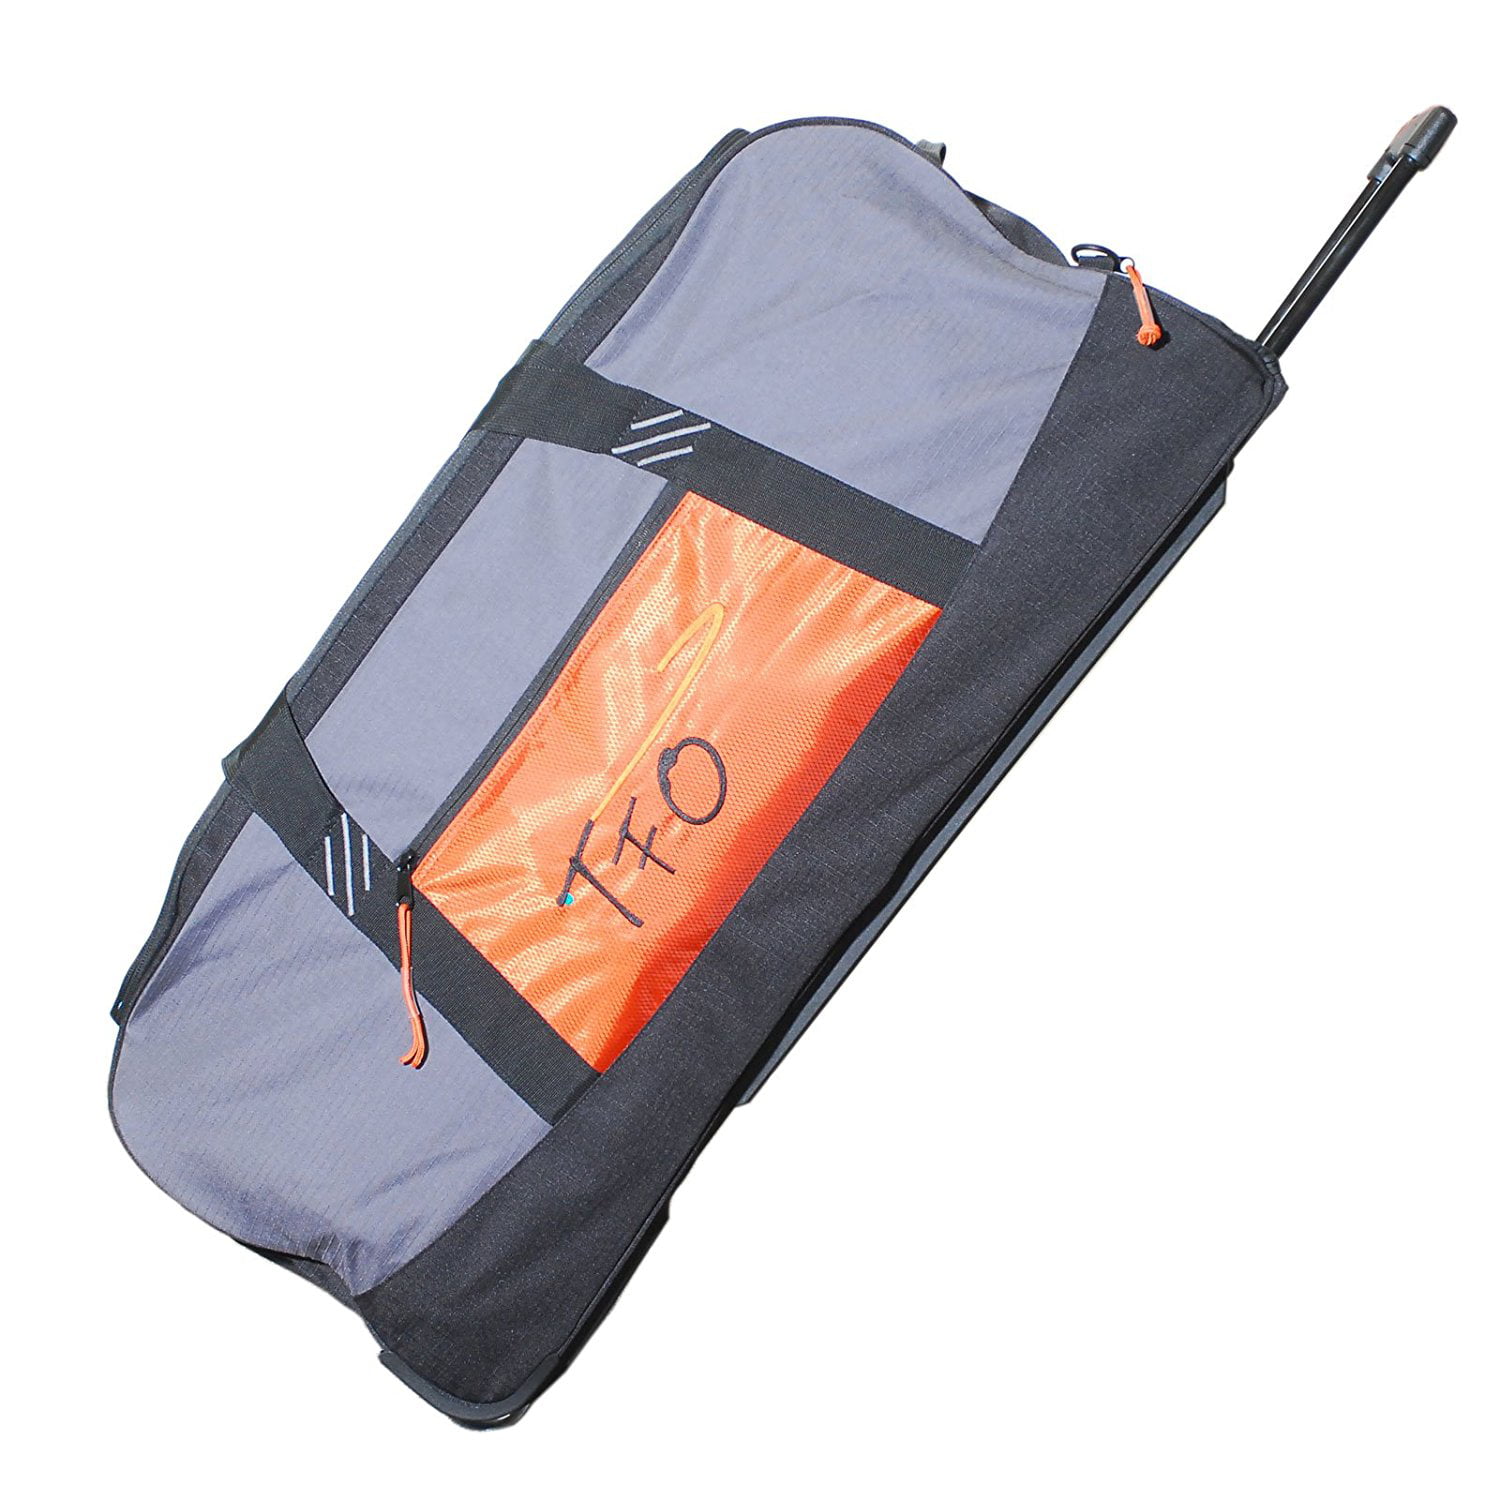 TFO Large Rolling Fly Fishing Cargo Bag/Luggage